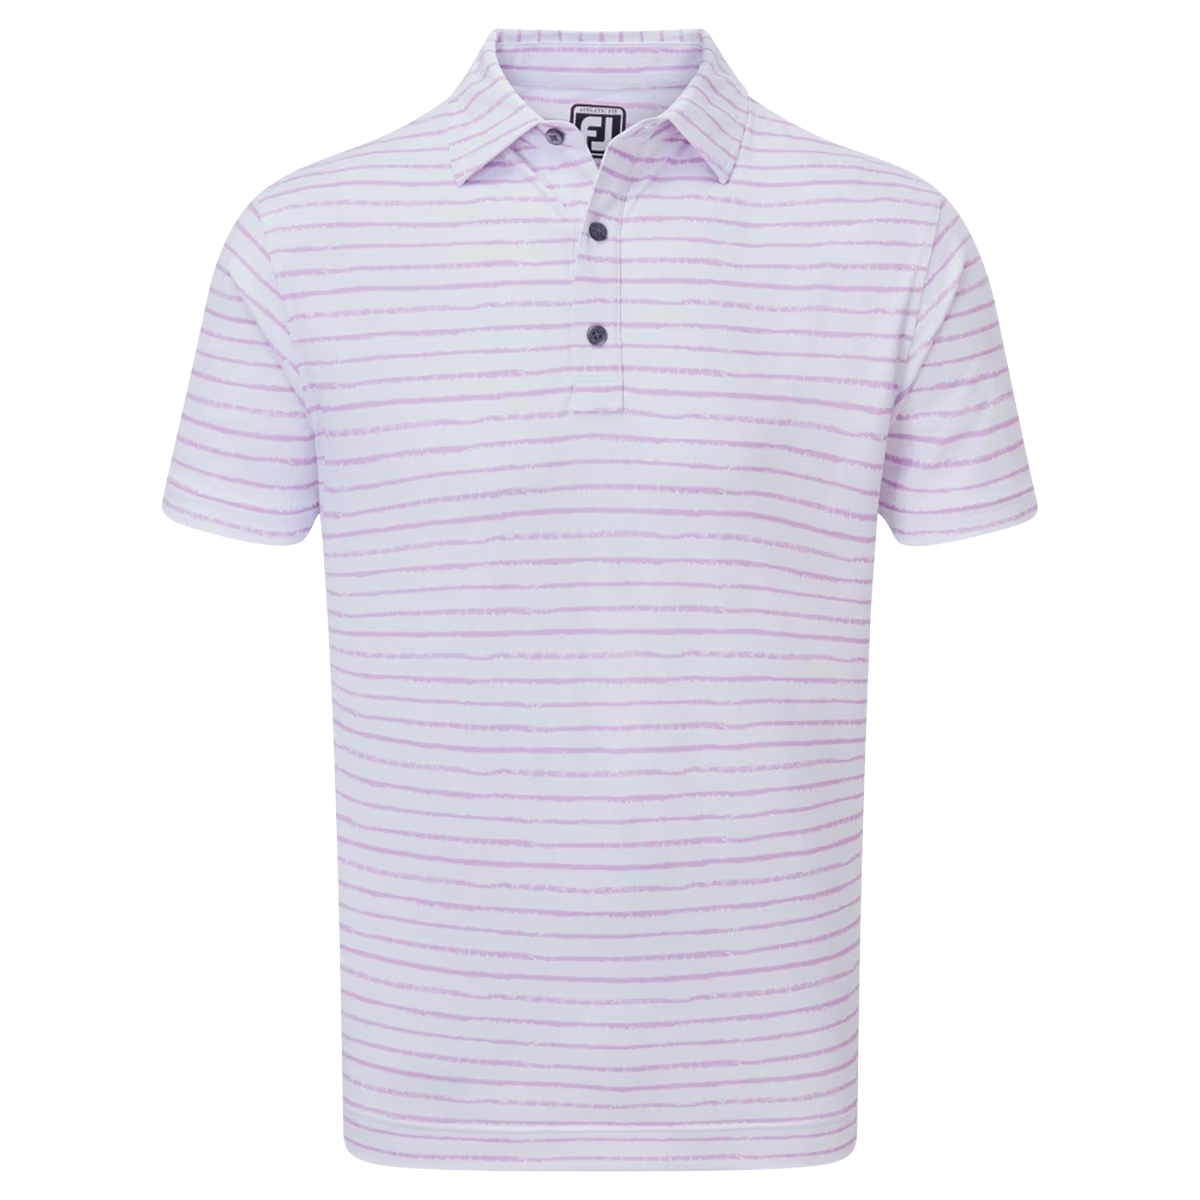 FootJoy Chalk Line Print Pique Mens Golf Polo Shirt  - White/Lavender